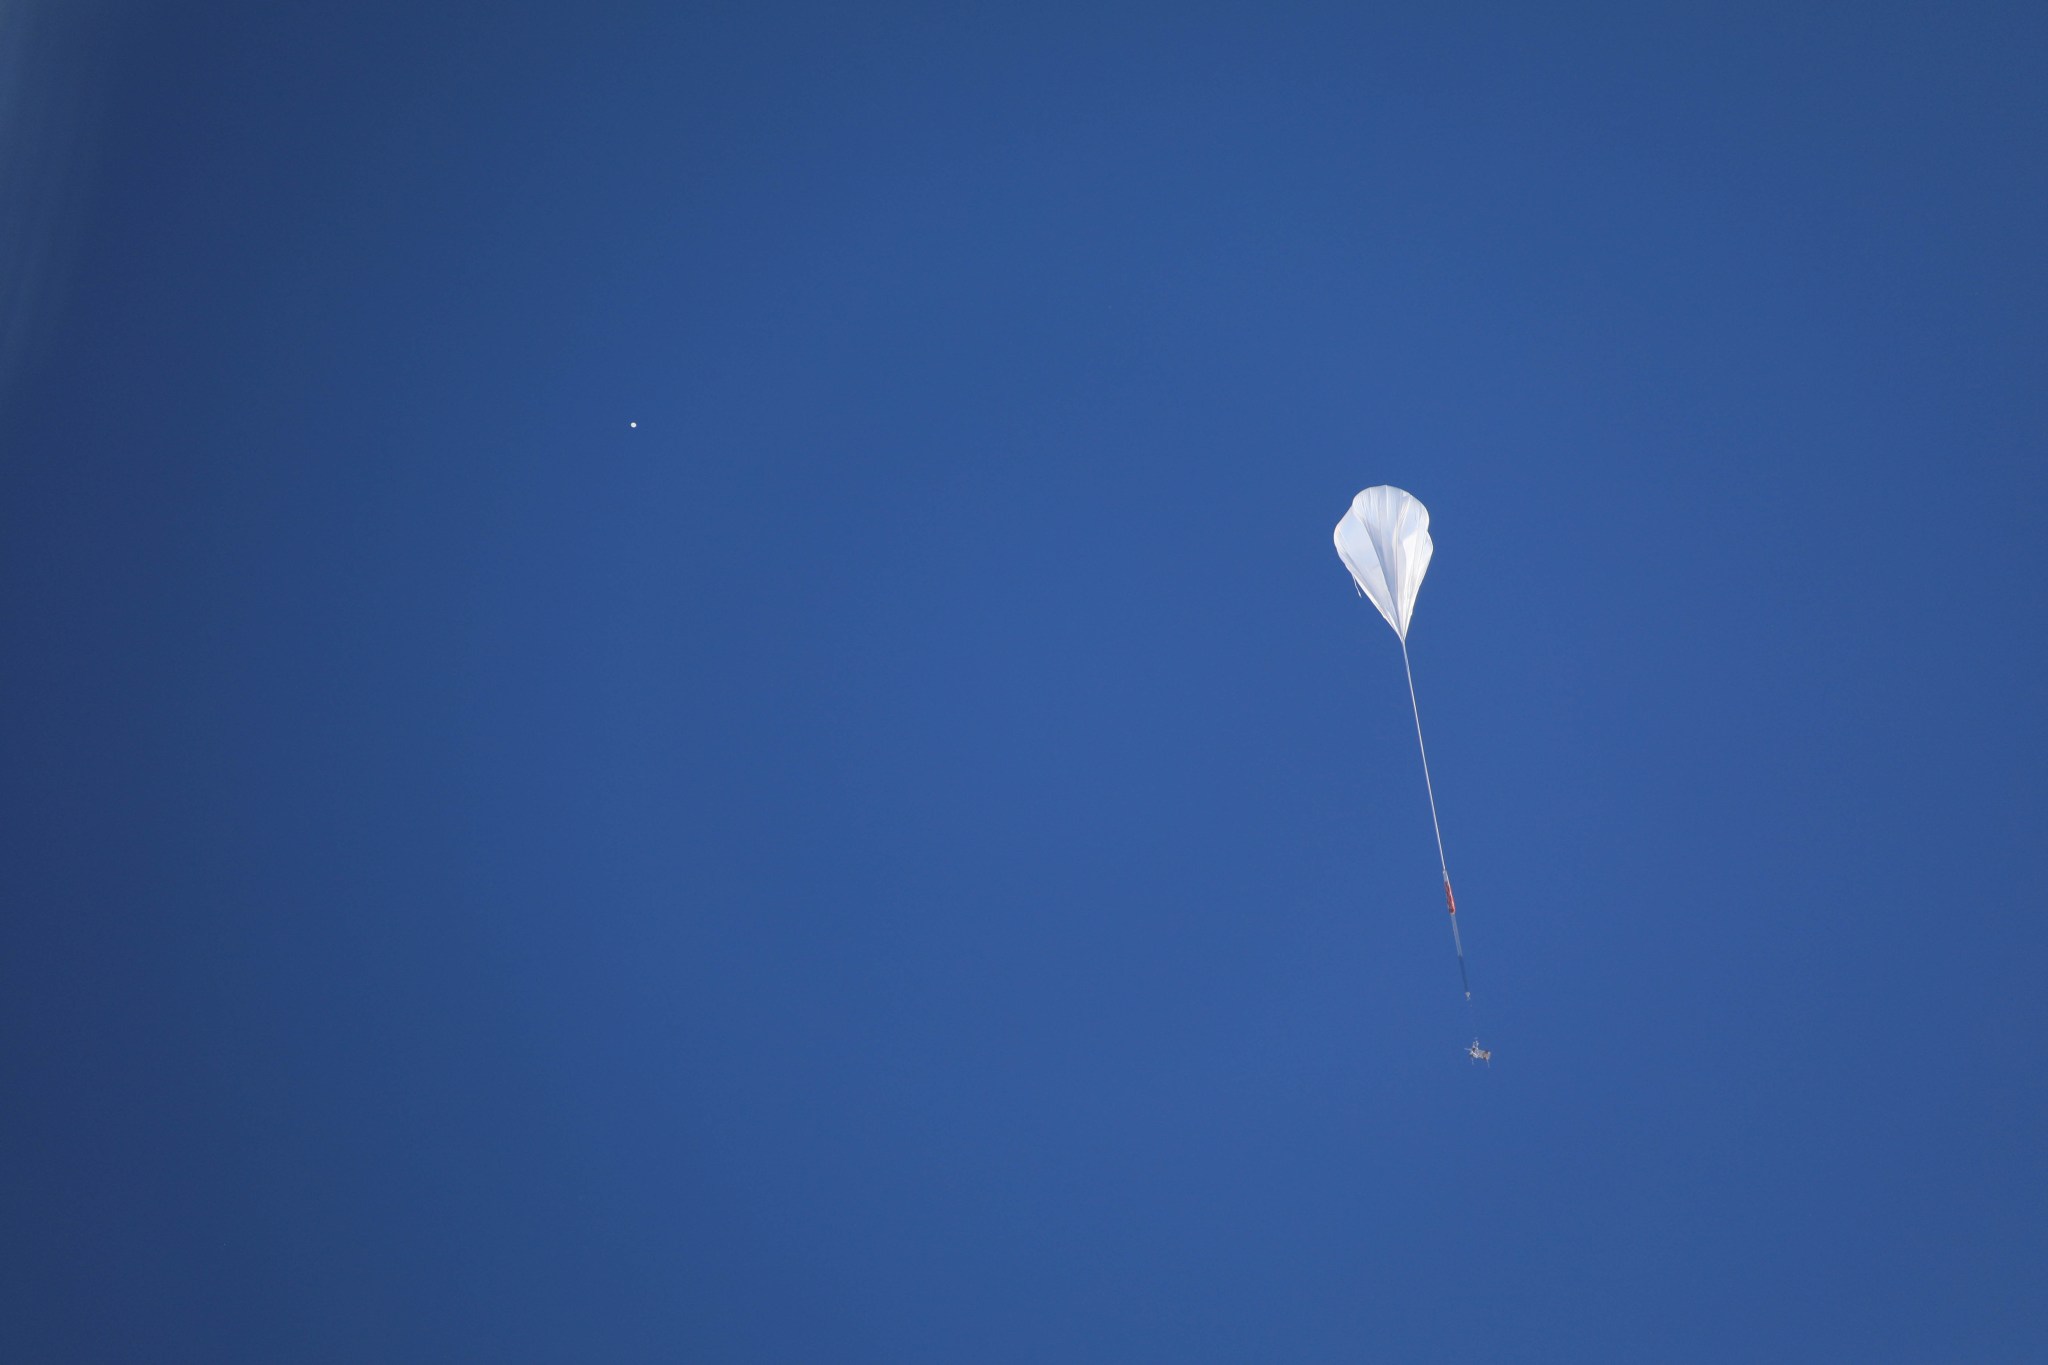 Scientific ballon lifting off against blue sky.